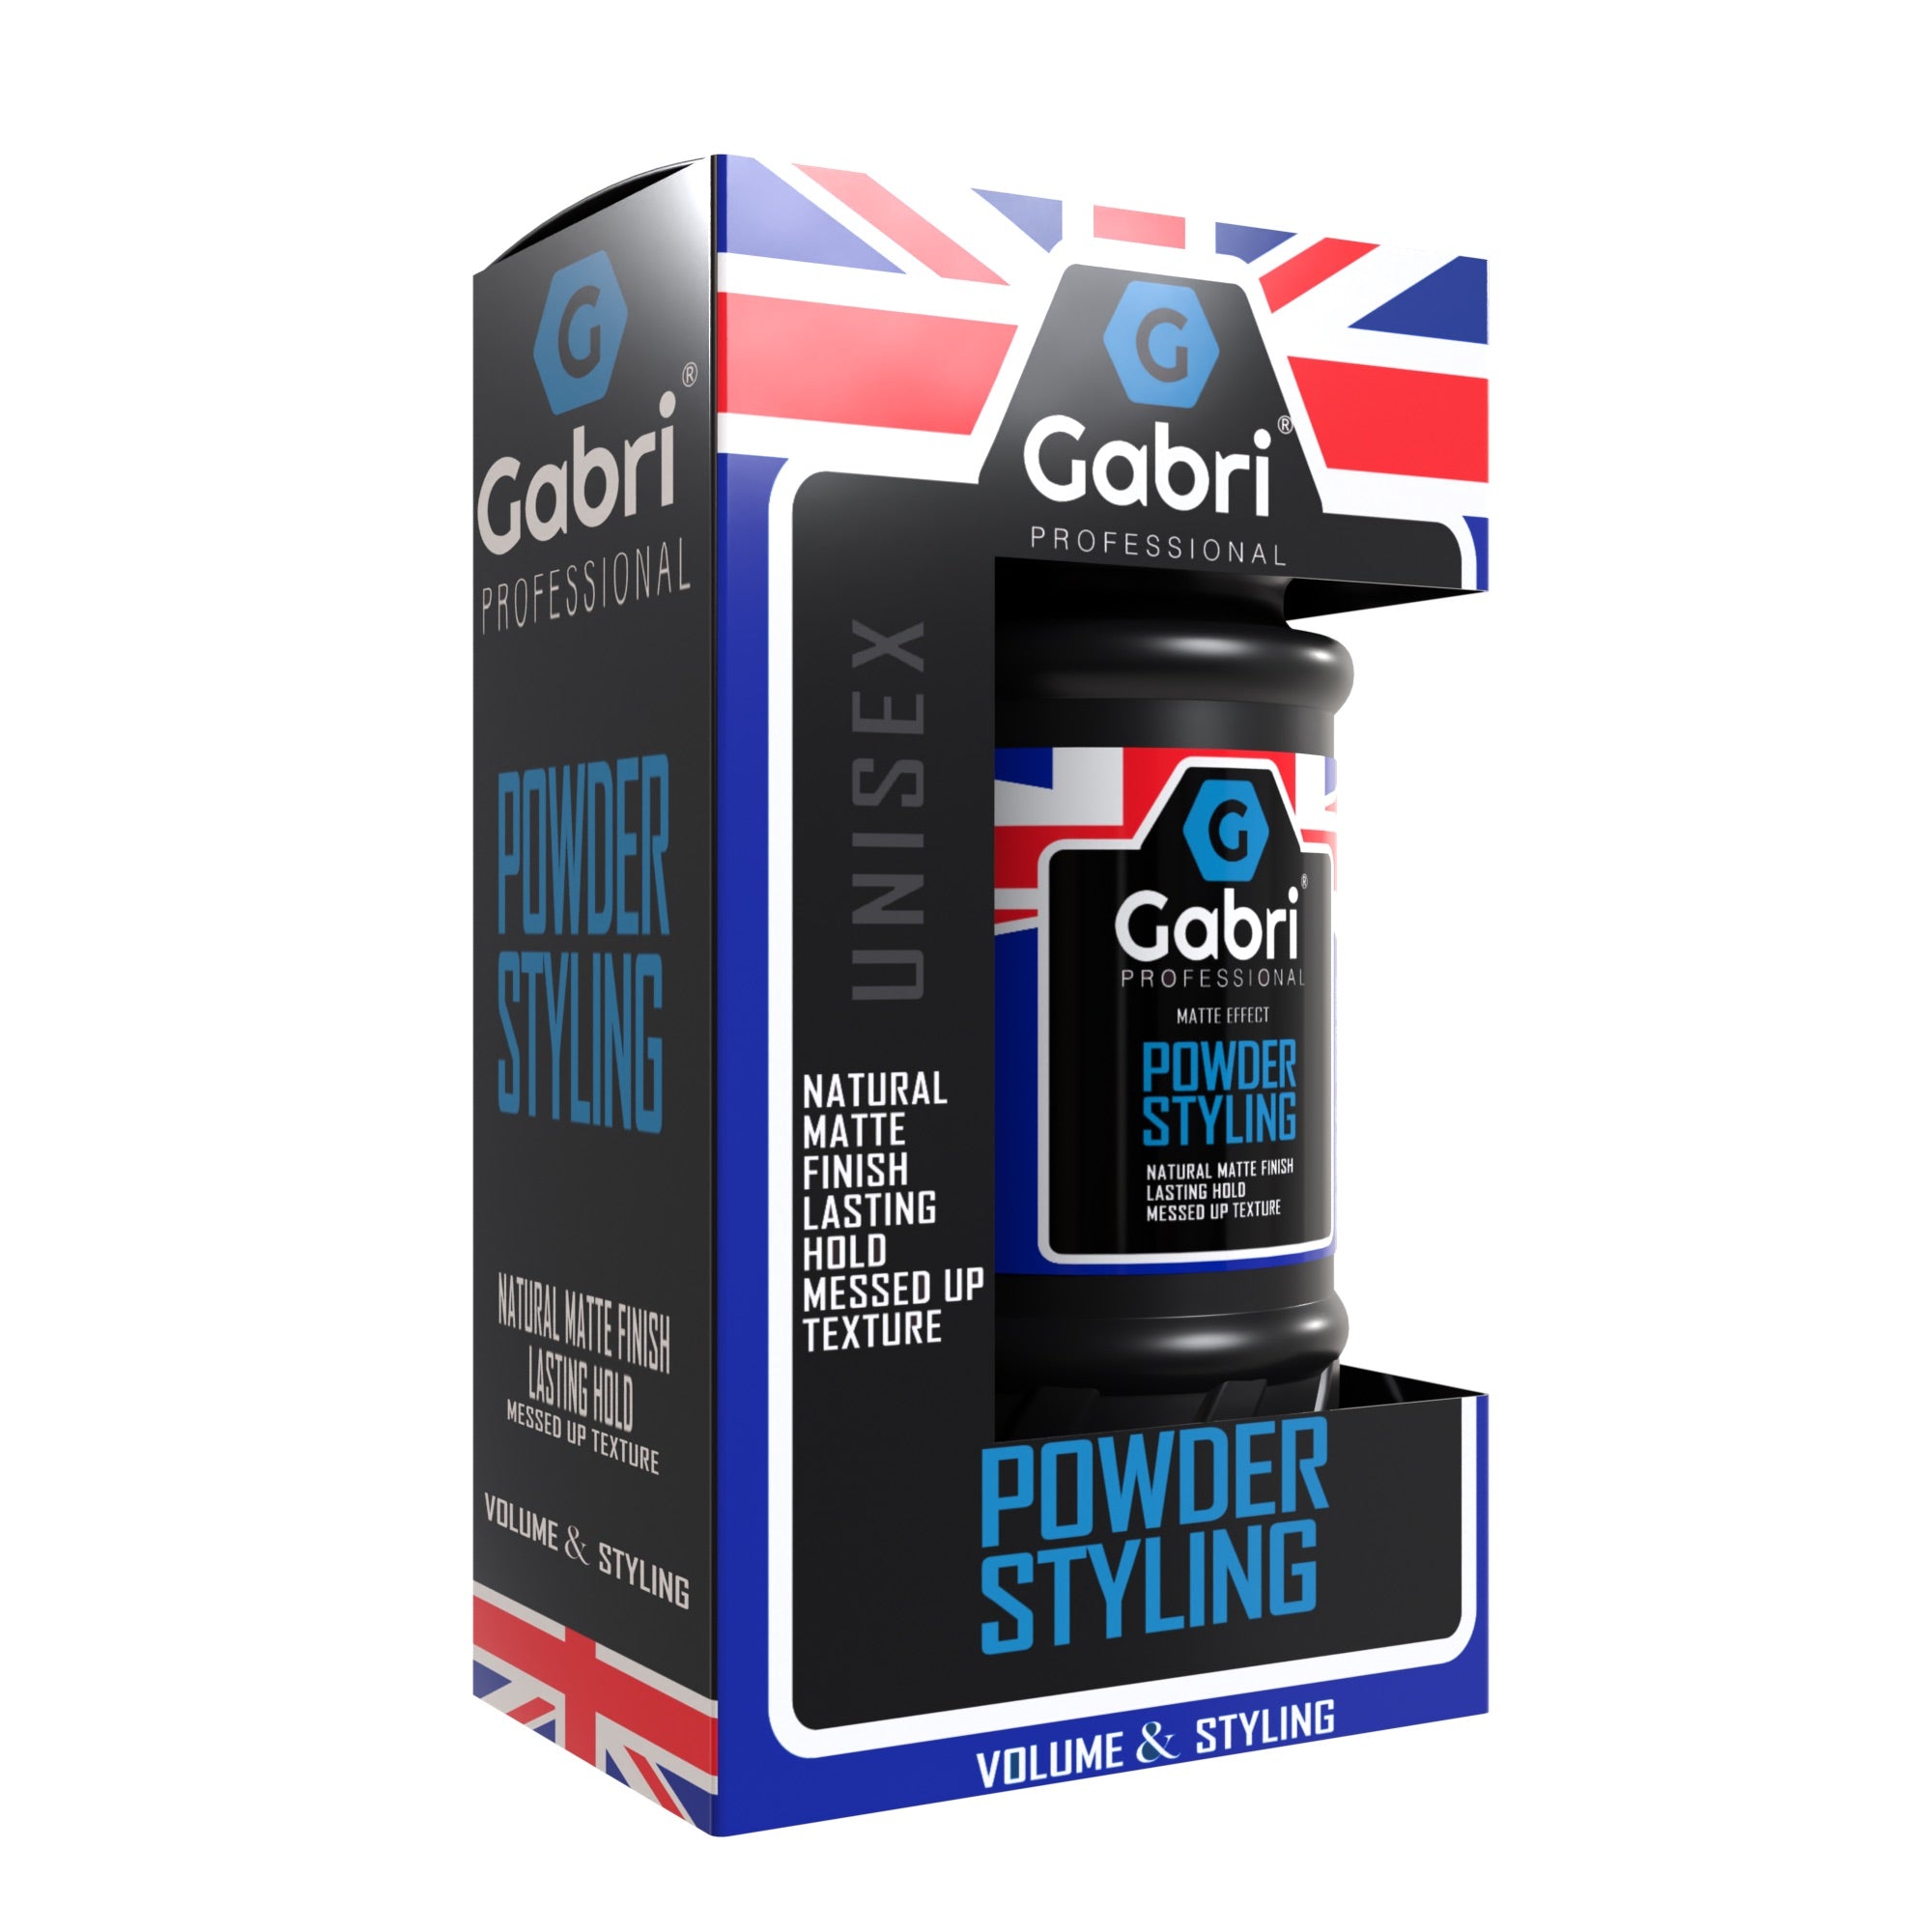 Gabri Professional - Hair Styling Powder Wax Volume & Styling 21g